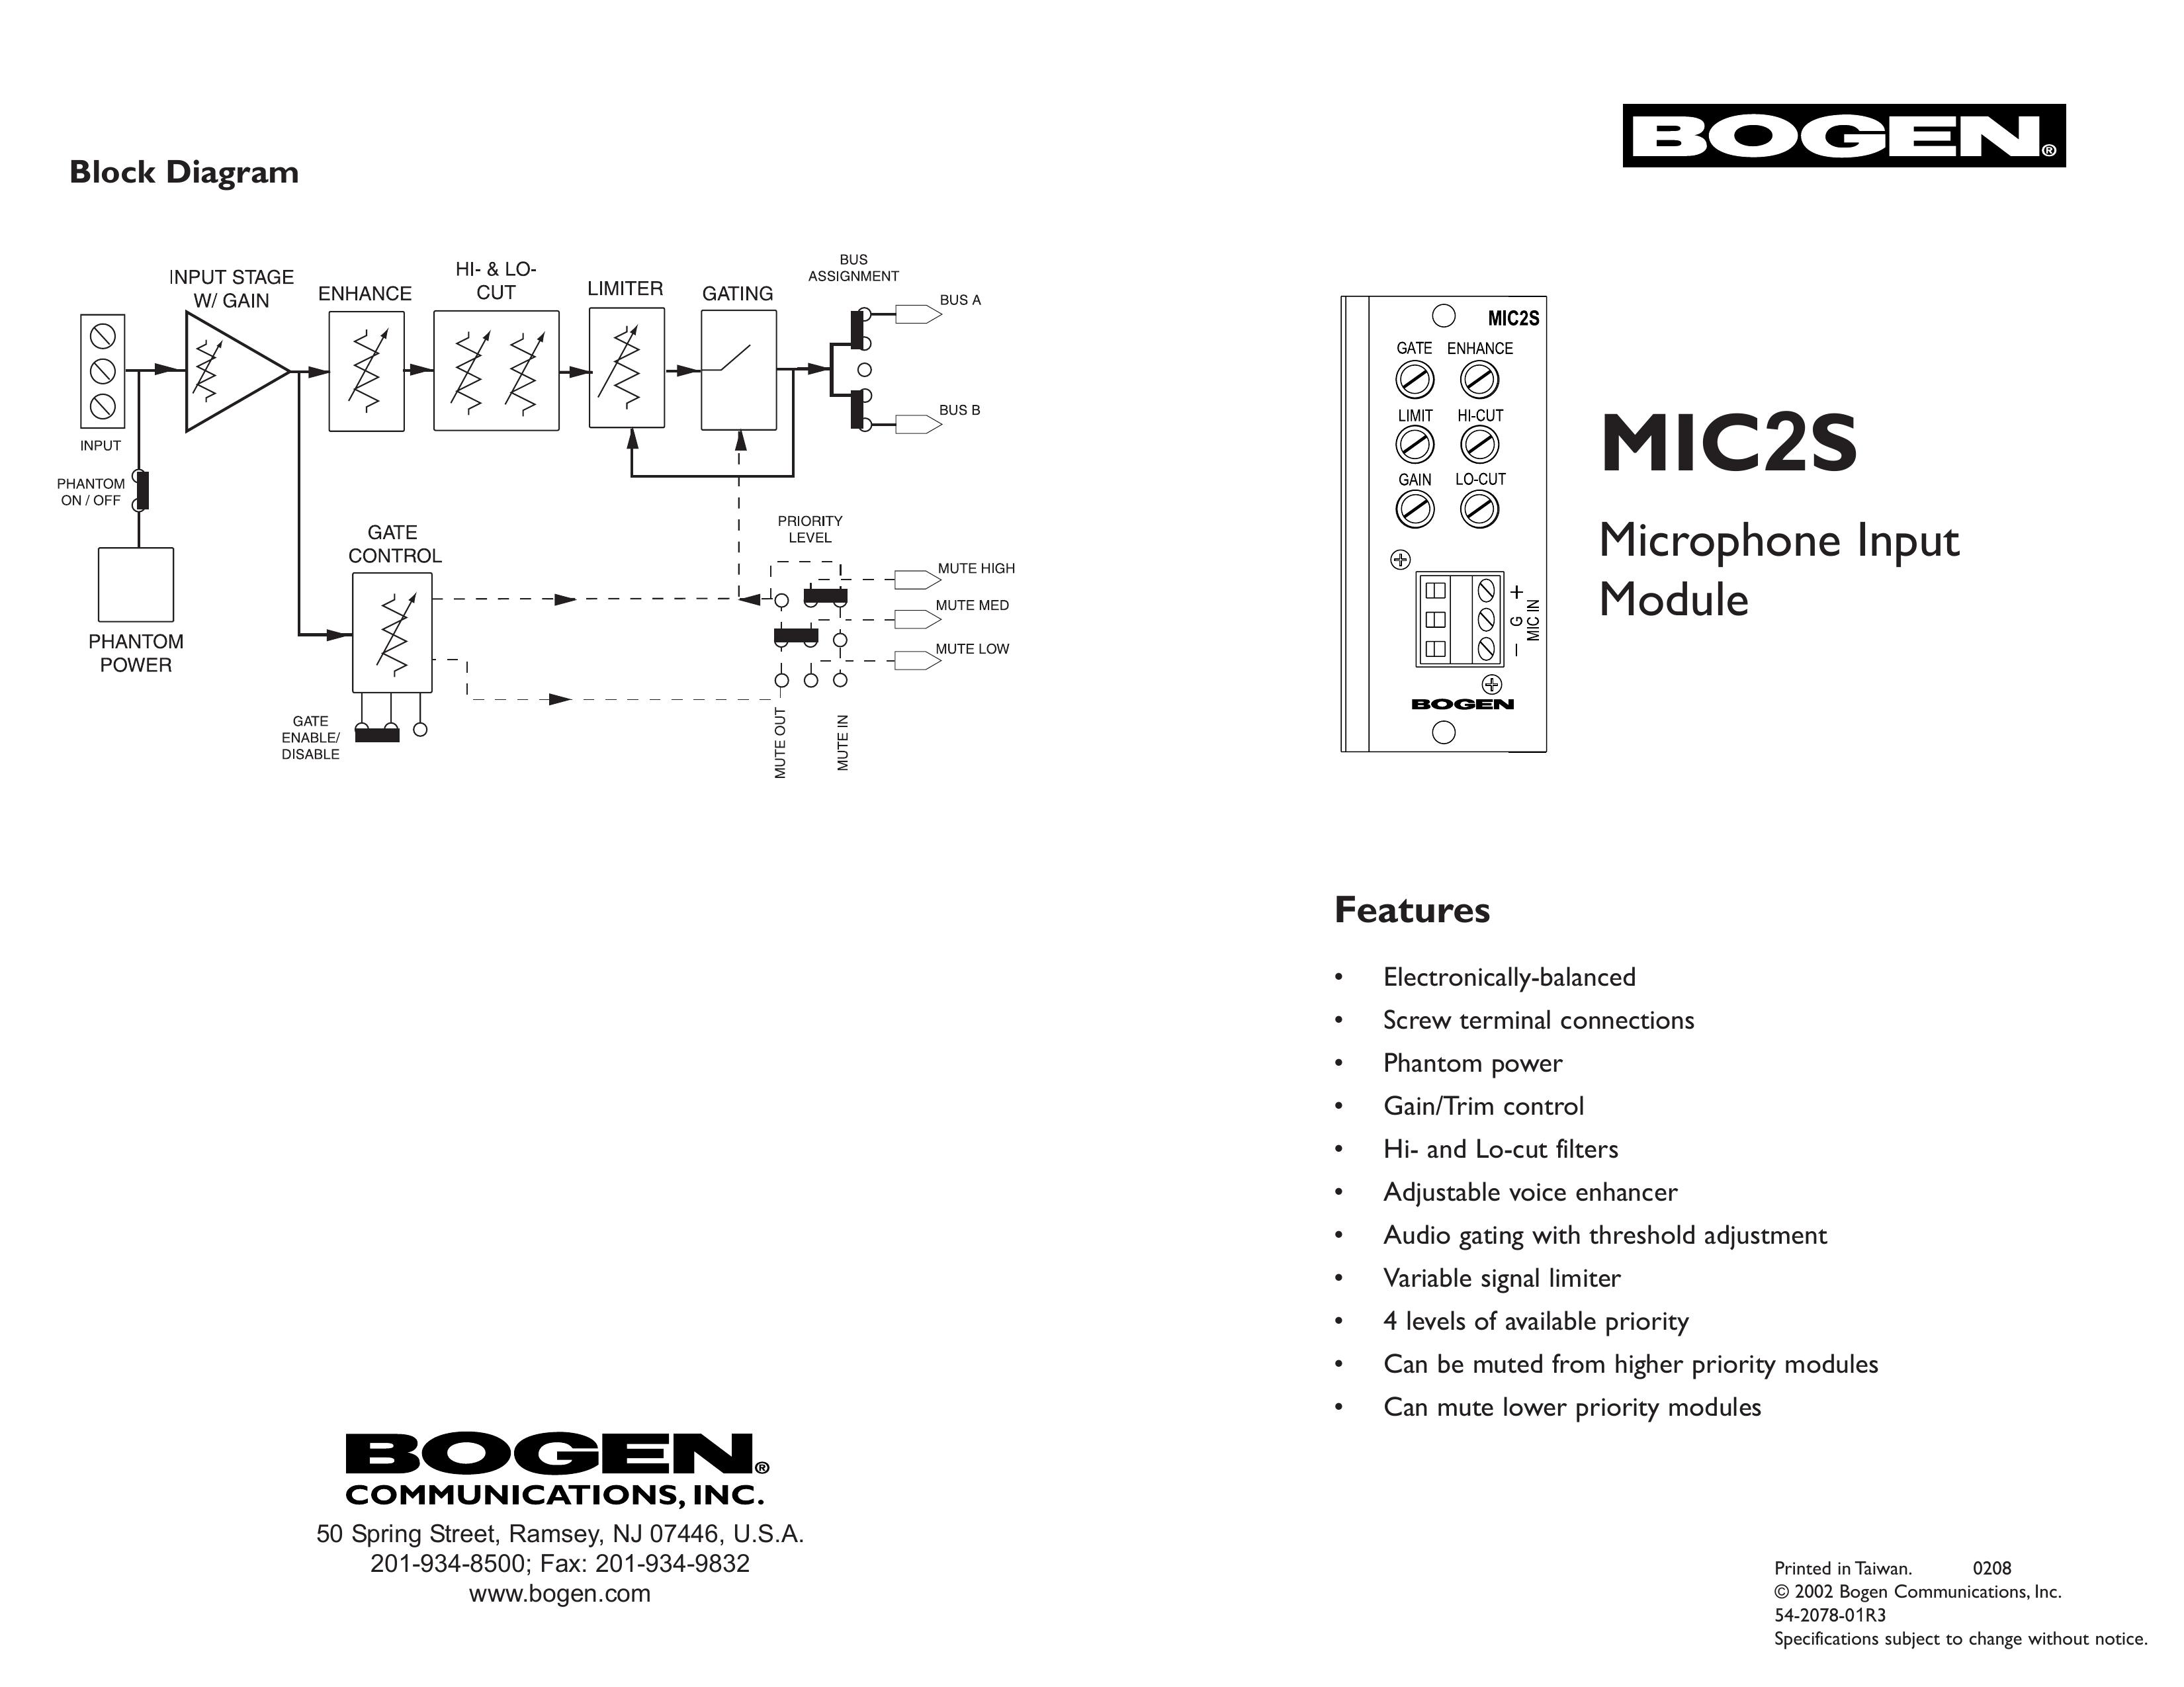 Bogen MIC2S Microphone User Manual